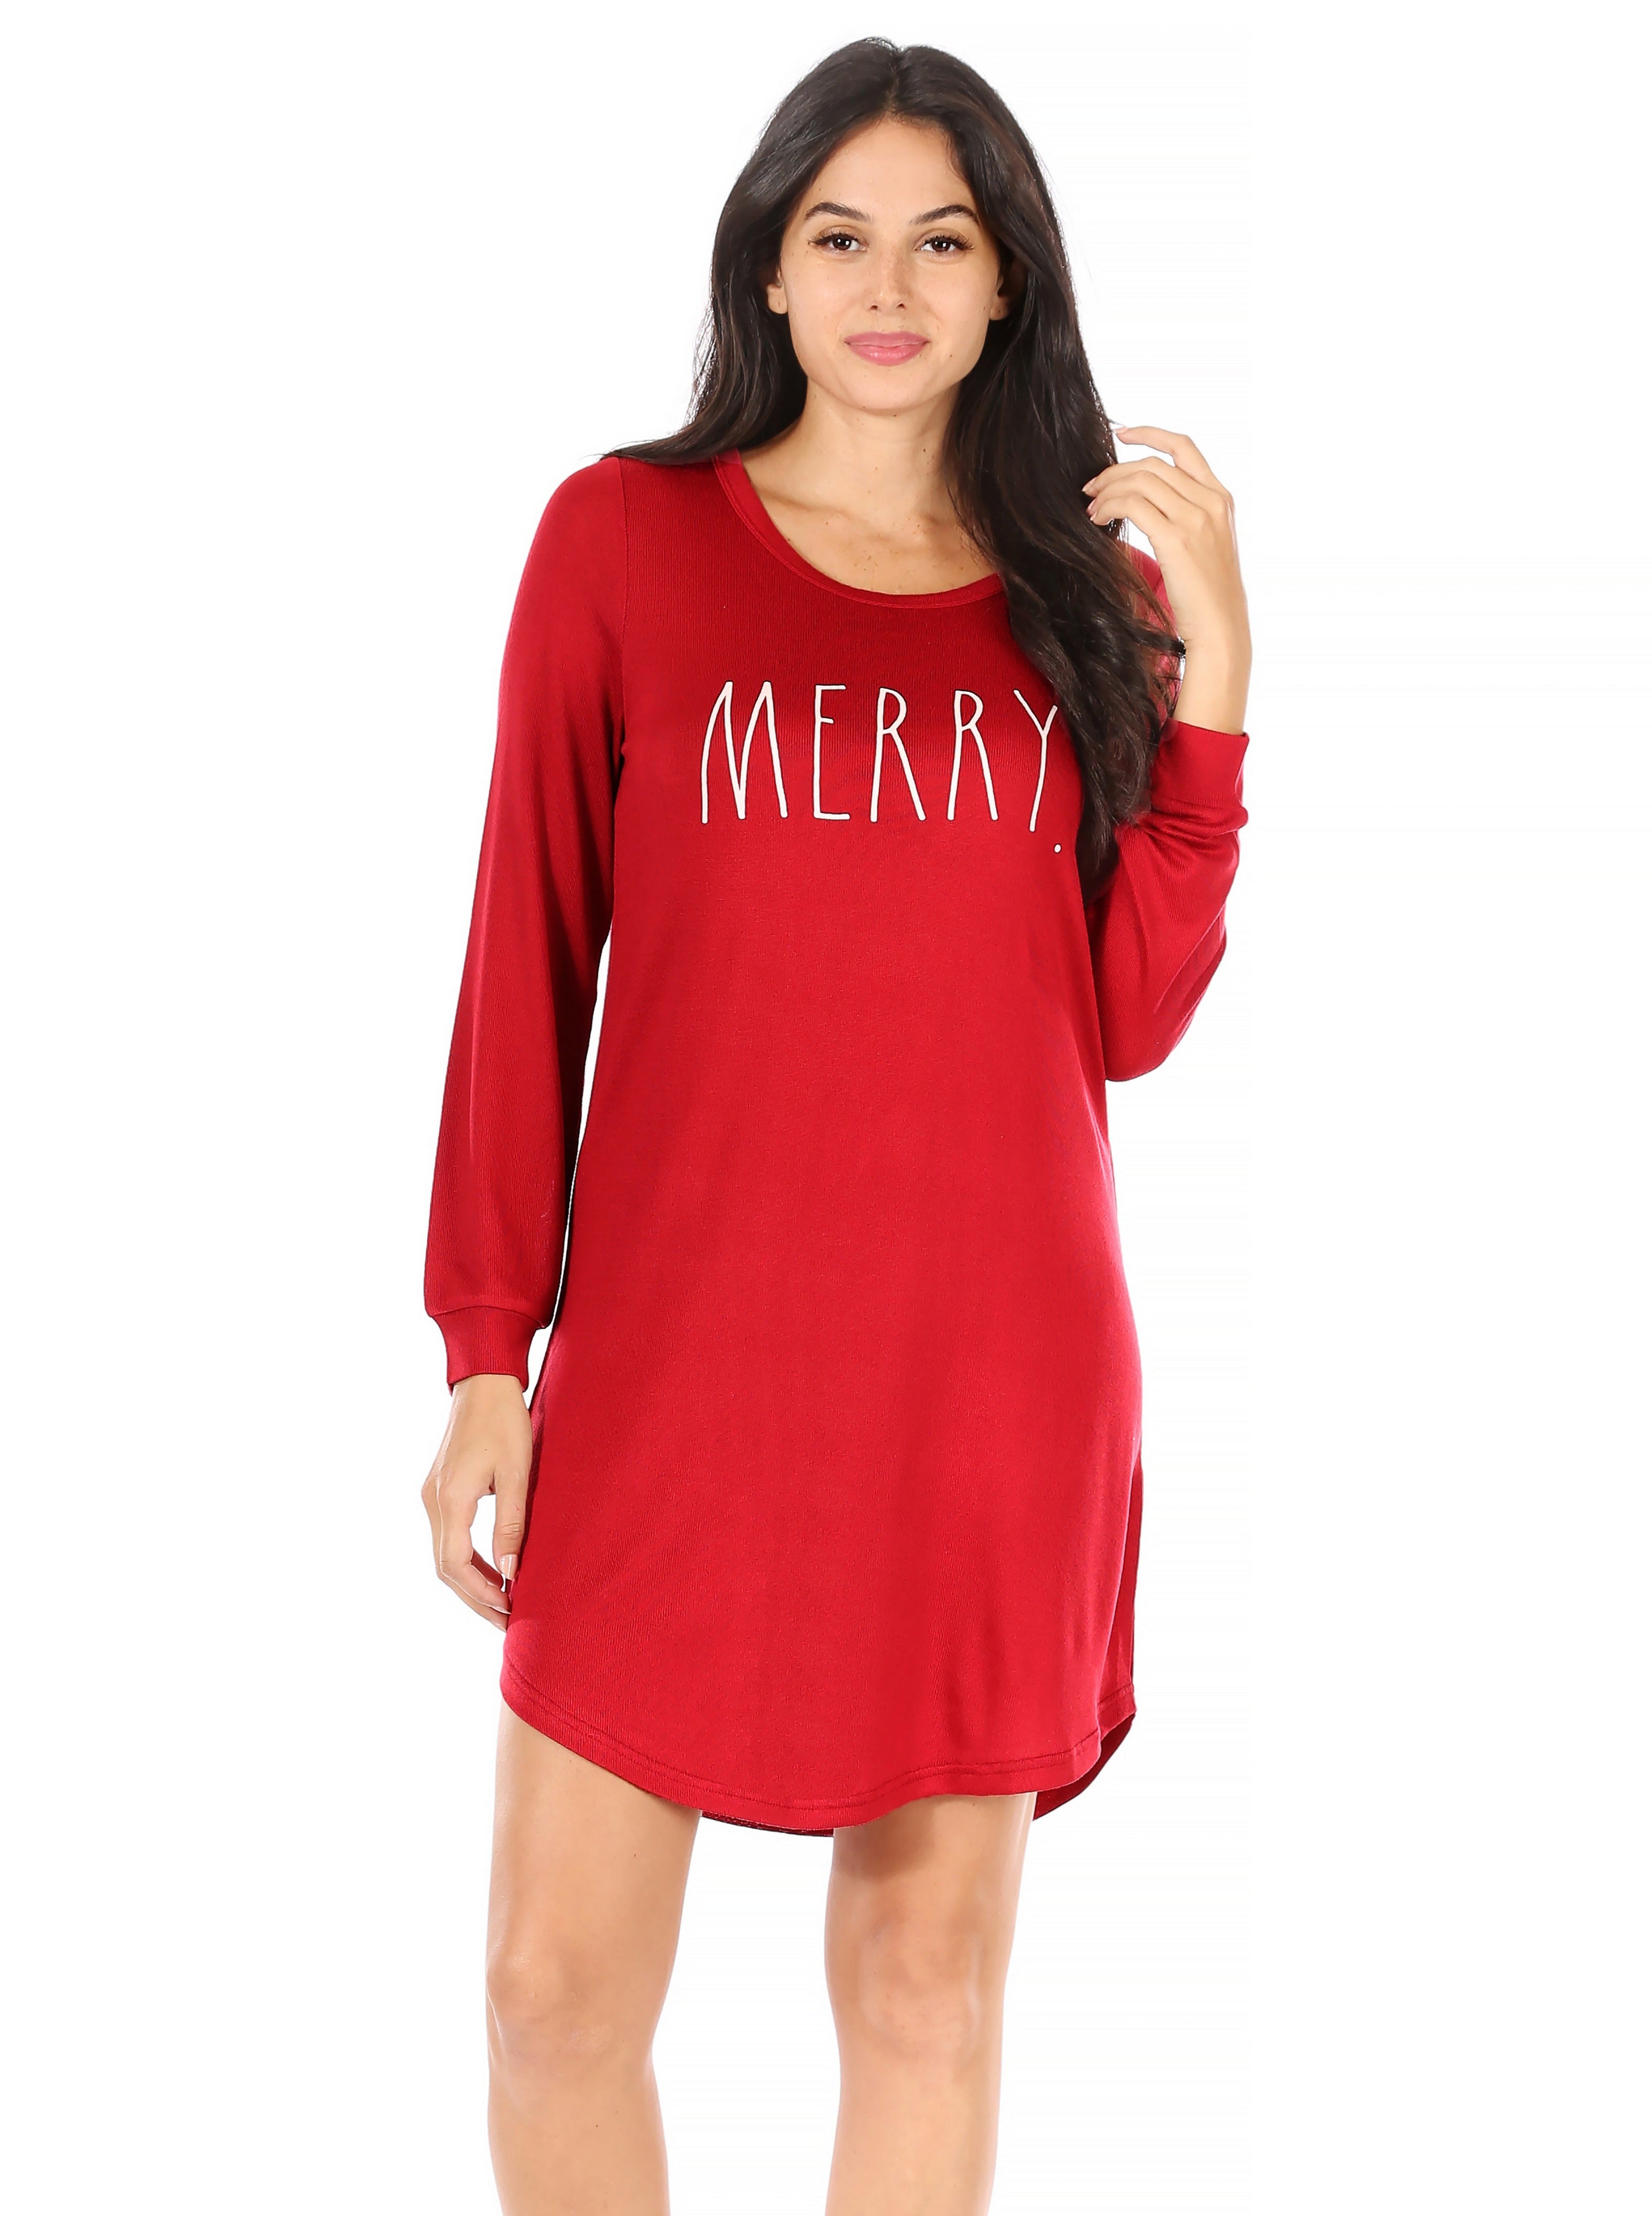 Women's "MERRY" Hacci Long Sleeve Holiday Nightshirt - Rae Dunn Wear